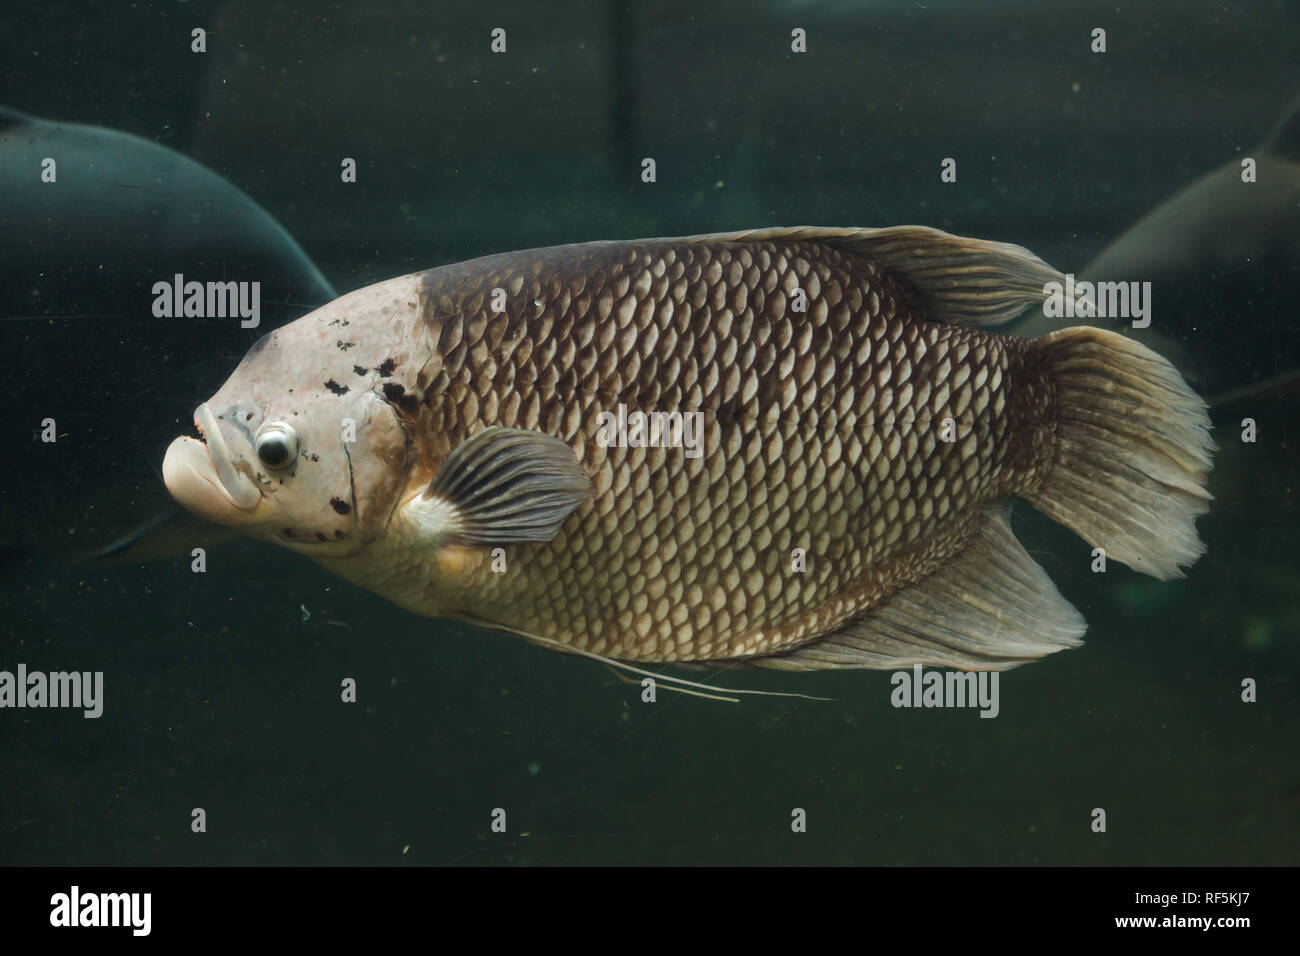 Giant gourami (Osphronemus goramy). Freshwater fish. Stock Photo